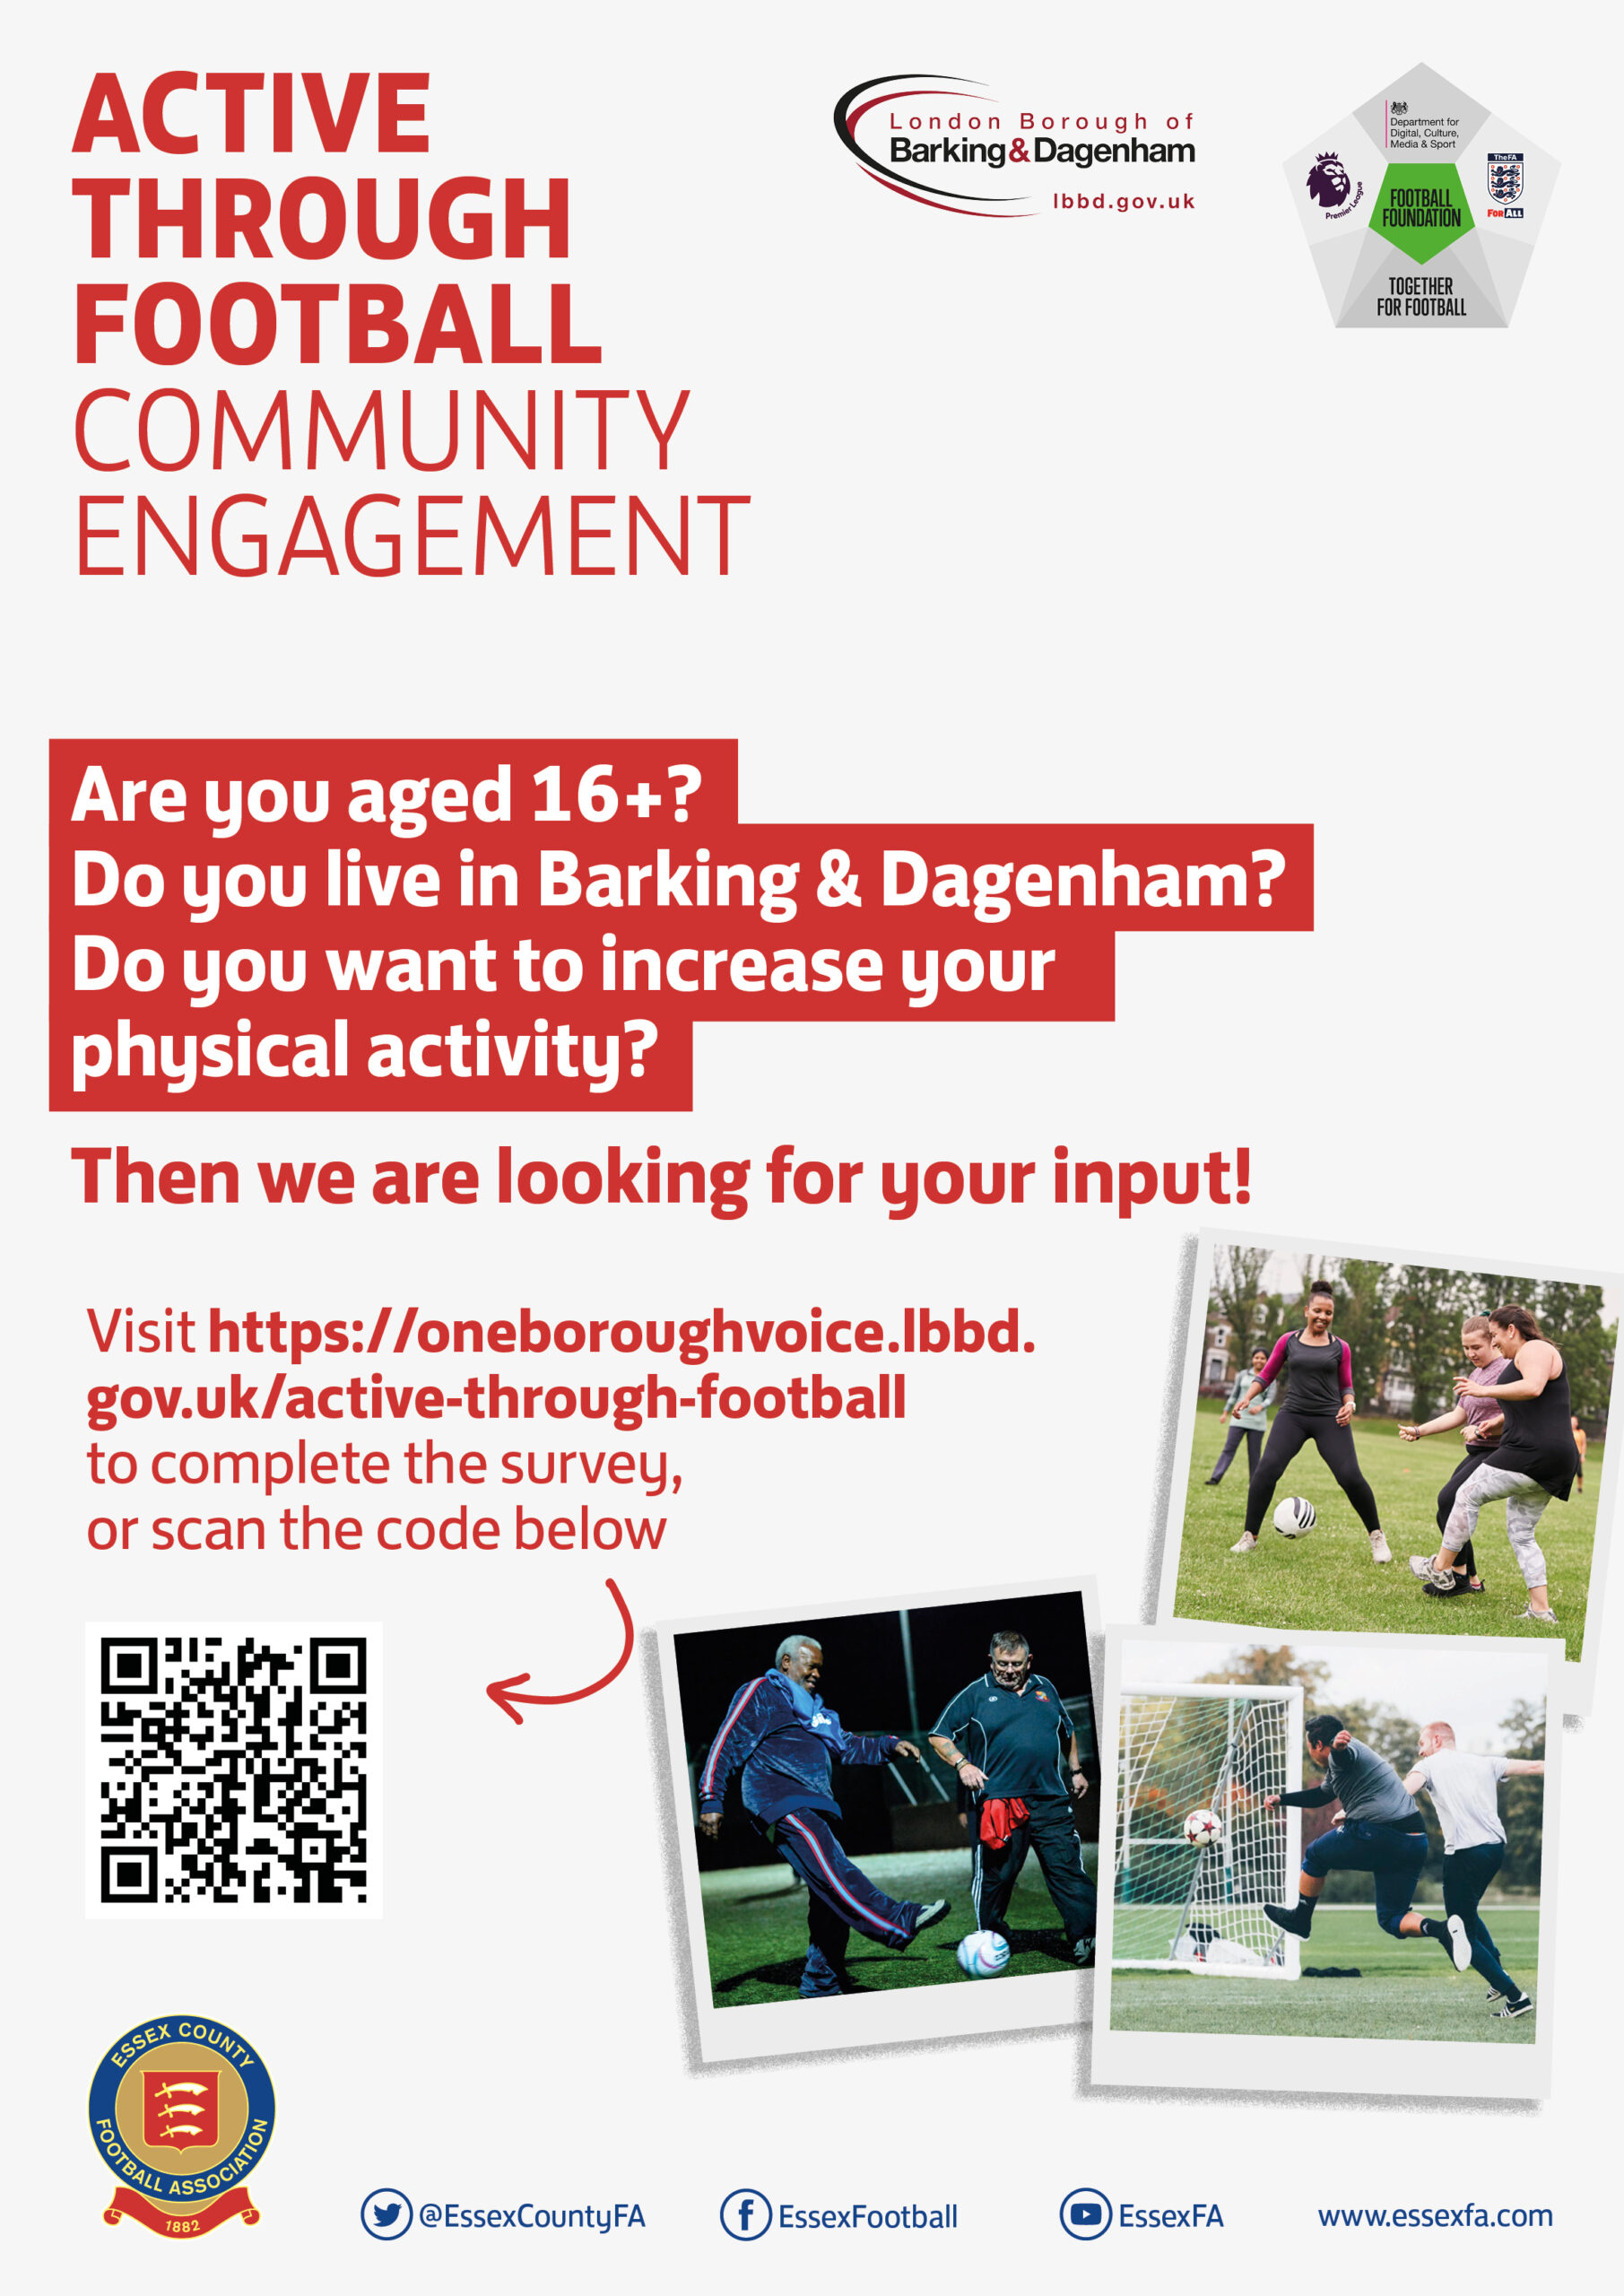 TWCP support Barking and Dagenham “Active Through Football” bid